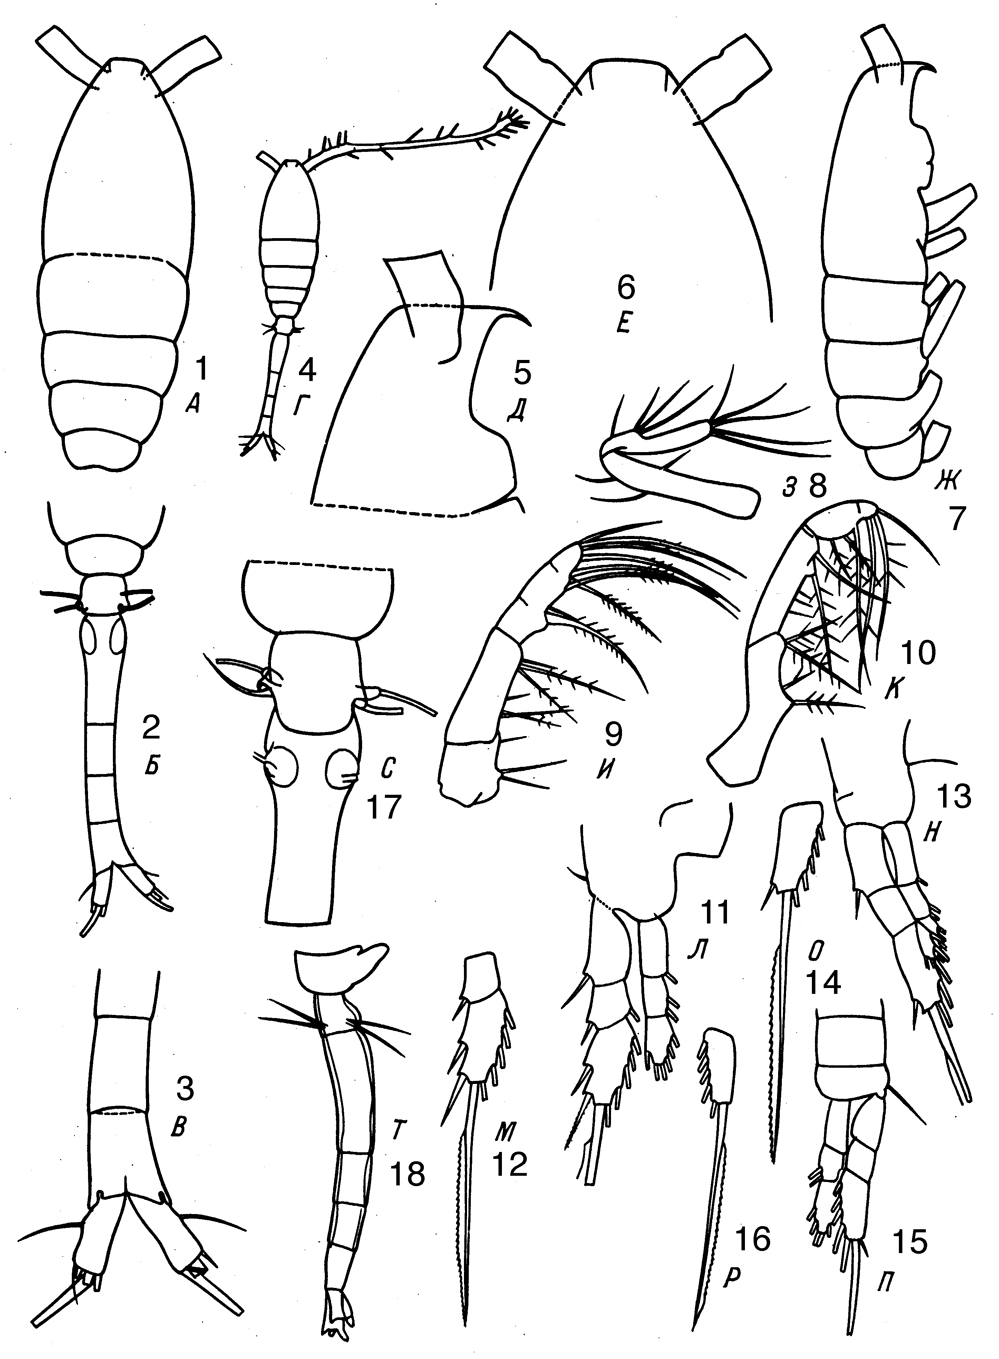 Species Oithona decipiens - Plate 7 of morphological figures